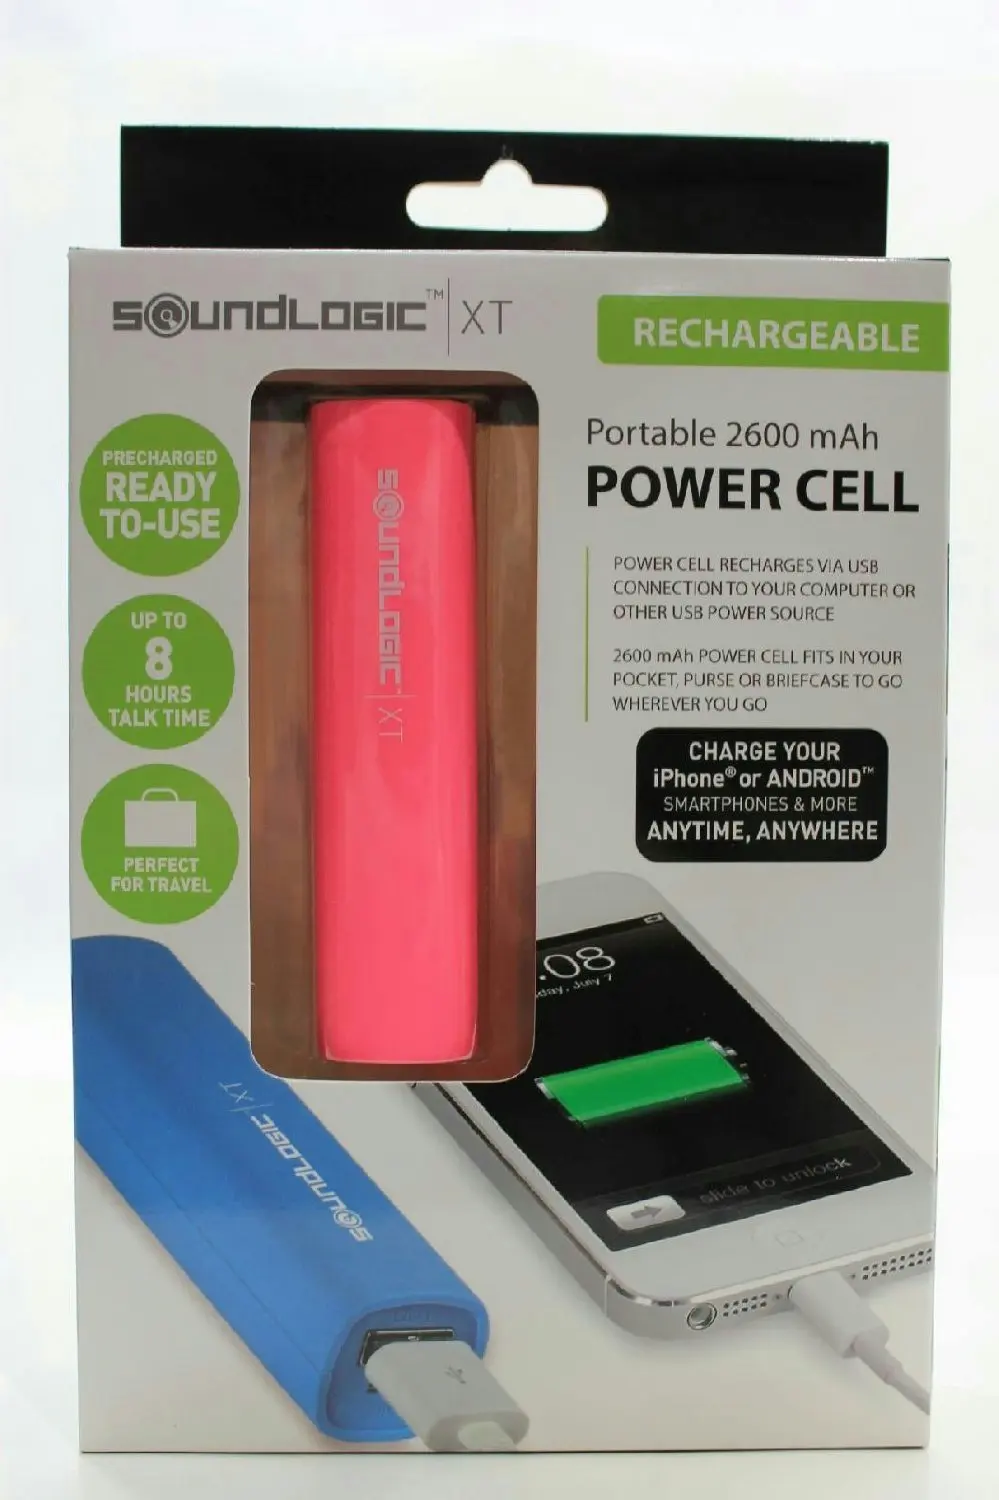 soundlogic xt power cell